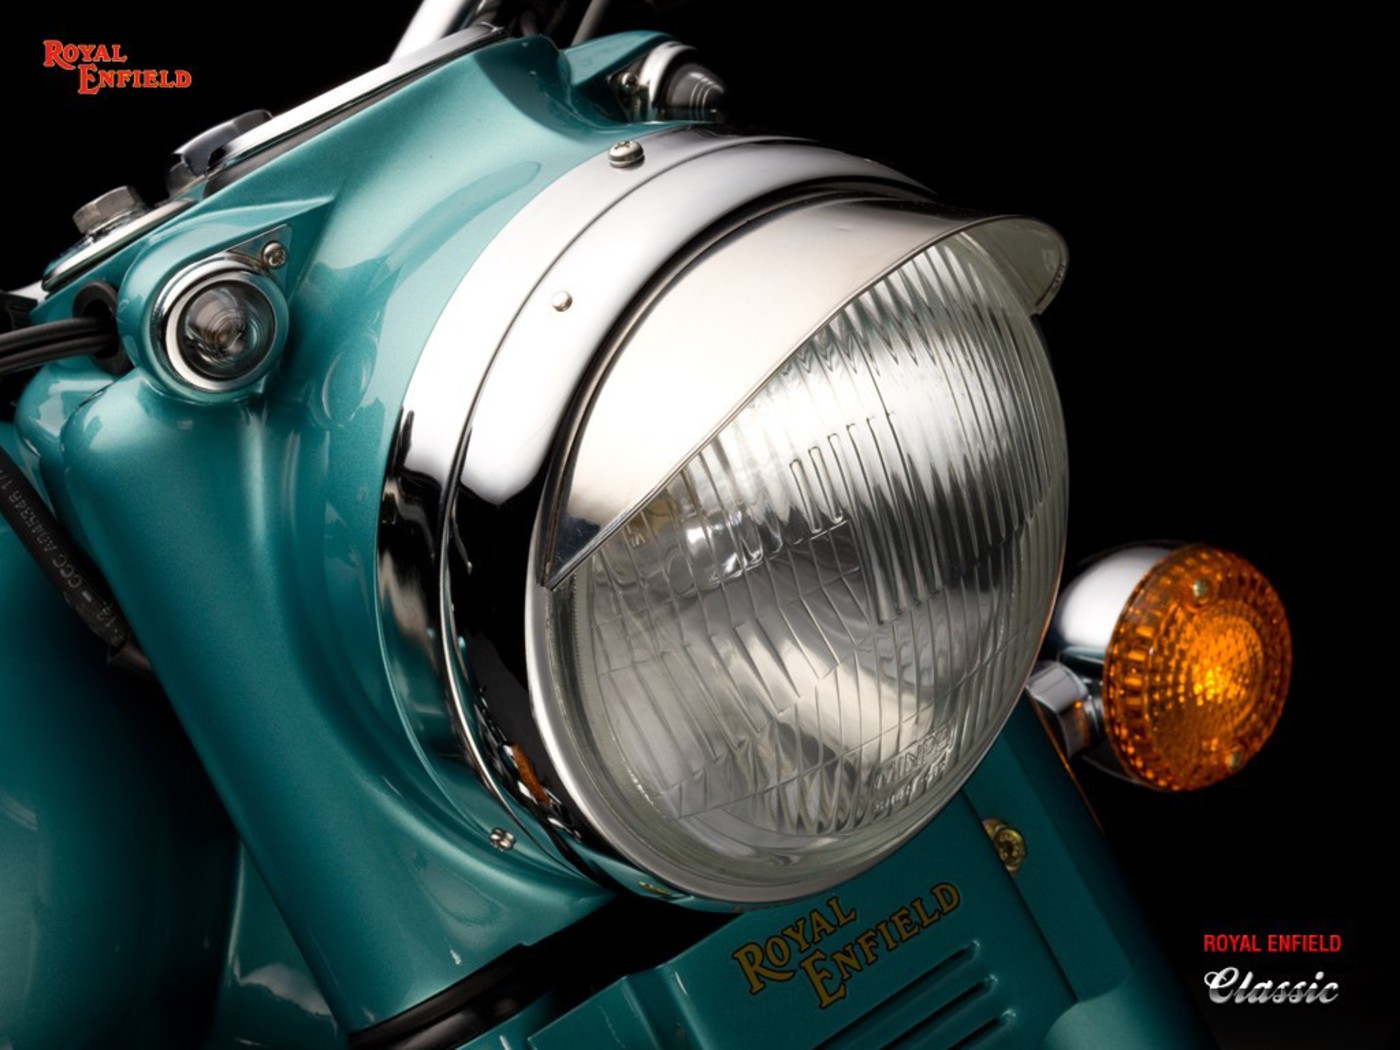 Classic 350 Image - Royal Enfield Classic 350 Headlight - HD Wallpaper 